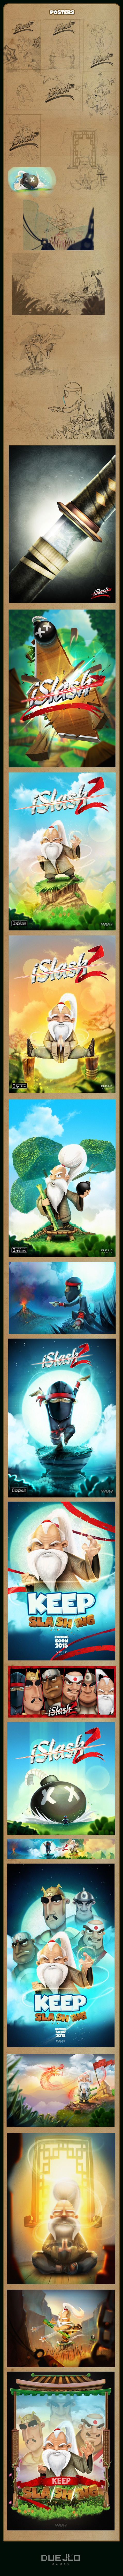 game islash ninja samurai mobile ios iphone android UI design concept art poster Puzzle game action game